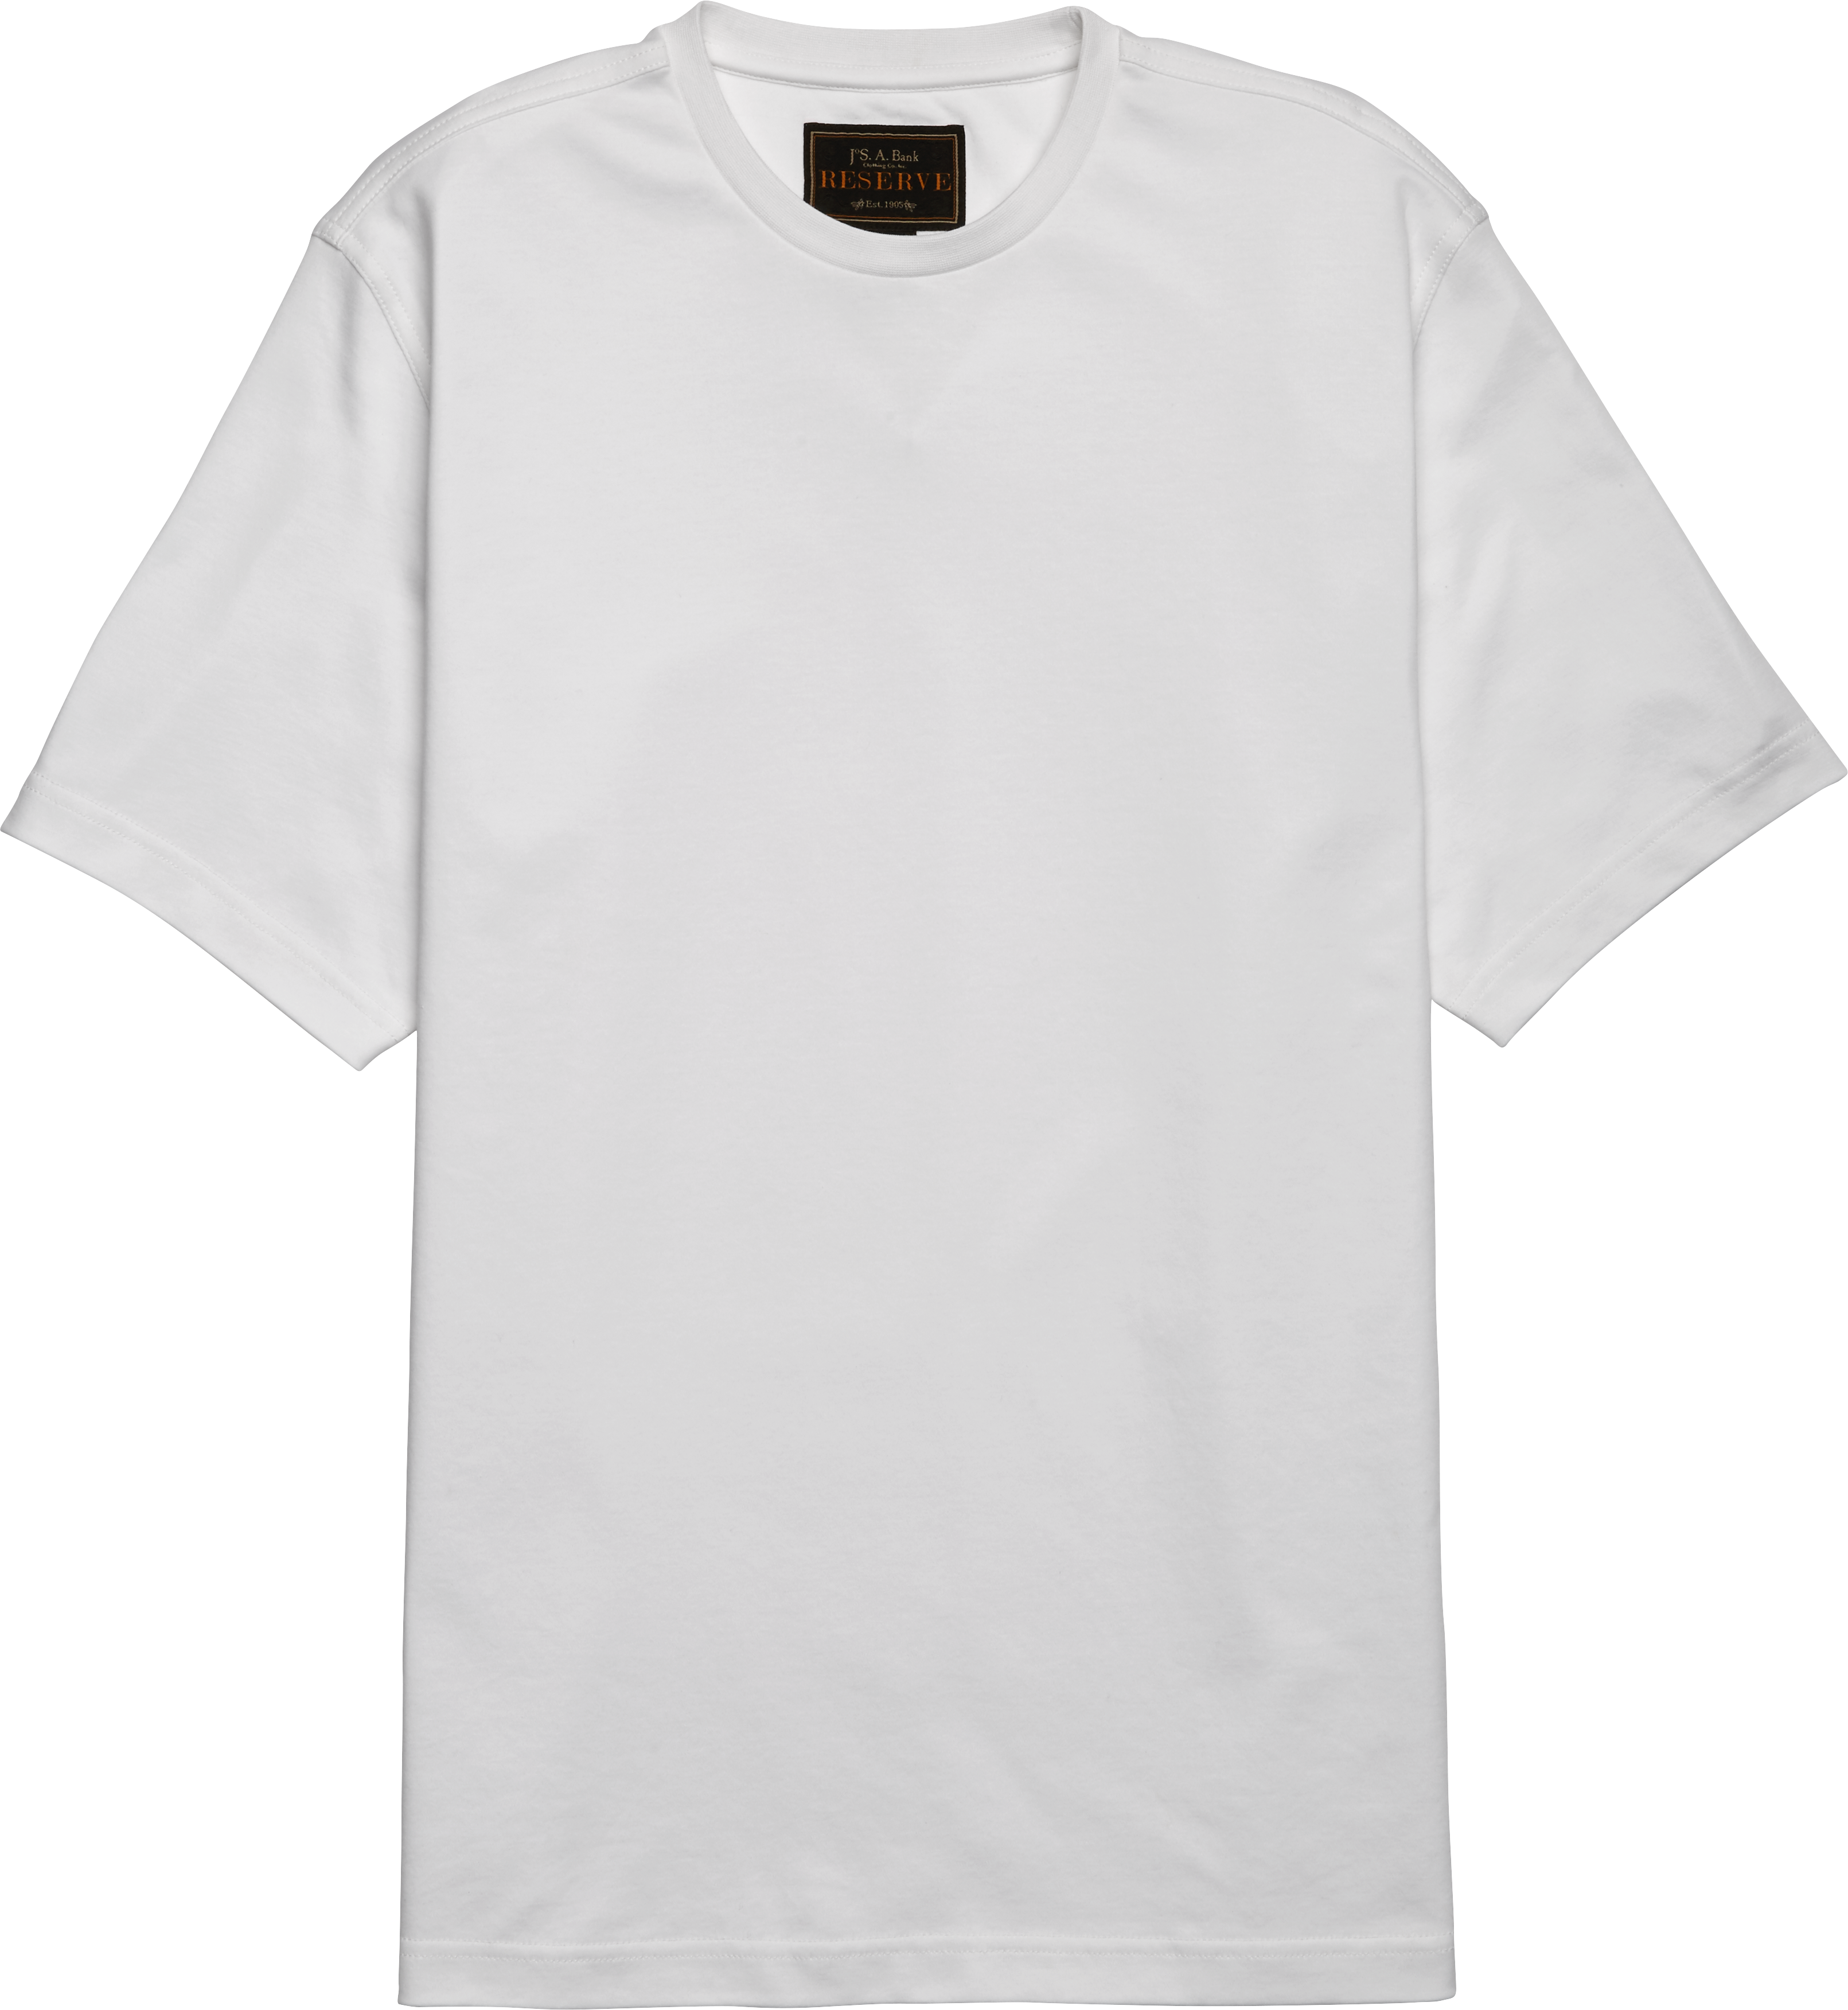 Salem Sportswear Men's T-Shirt - Navy - XL